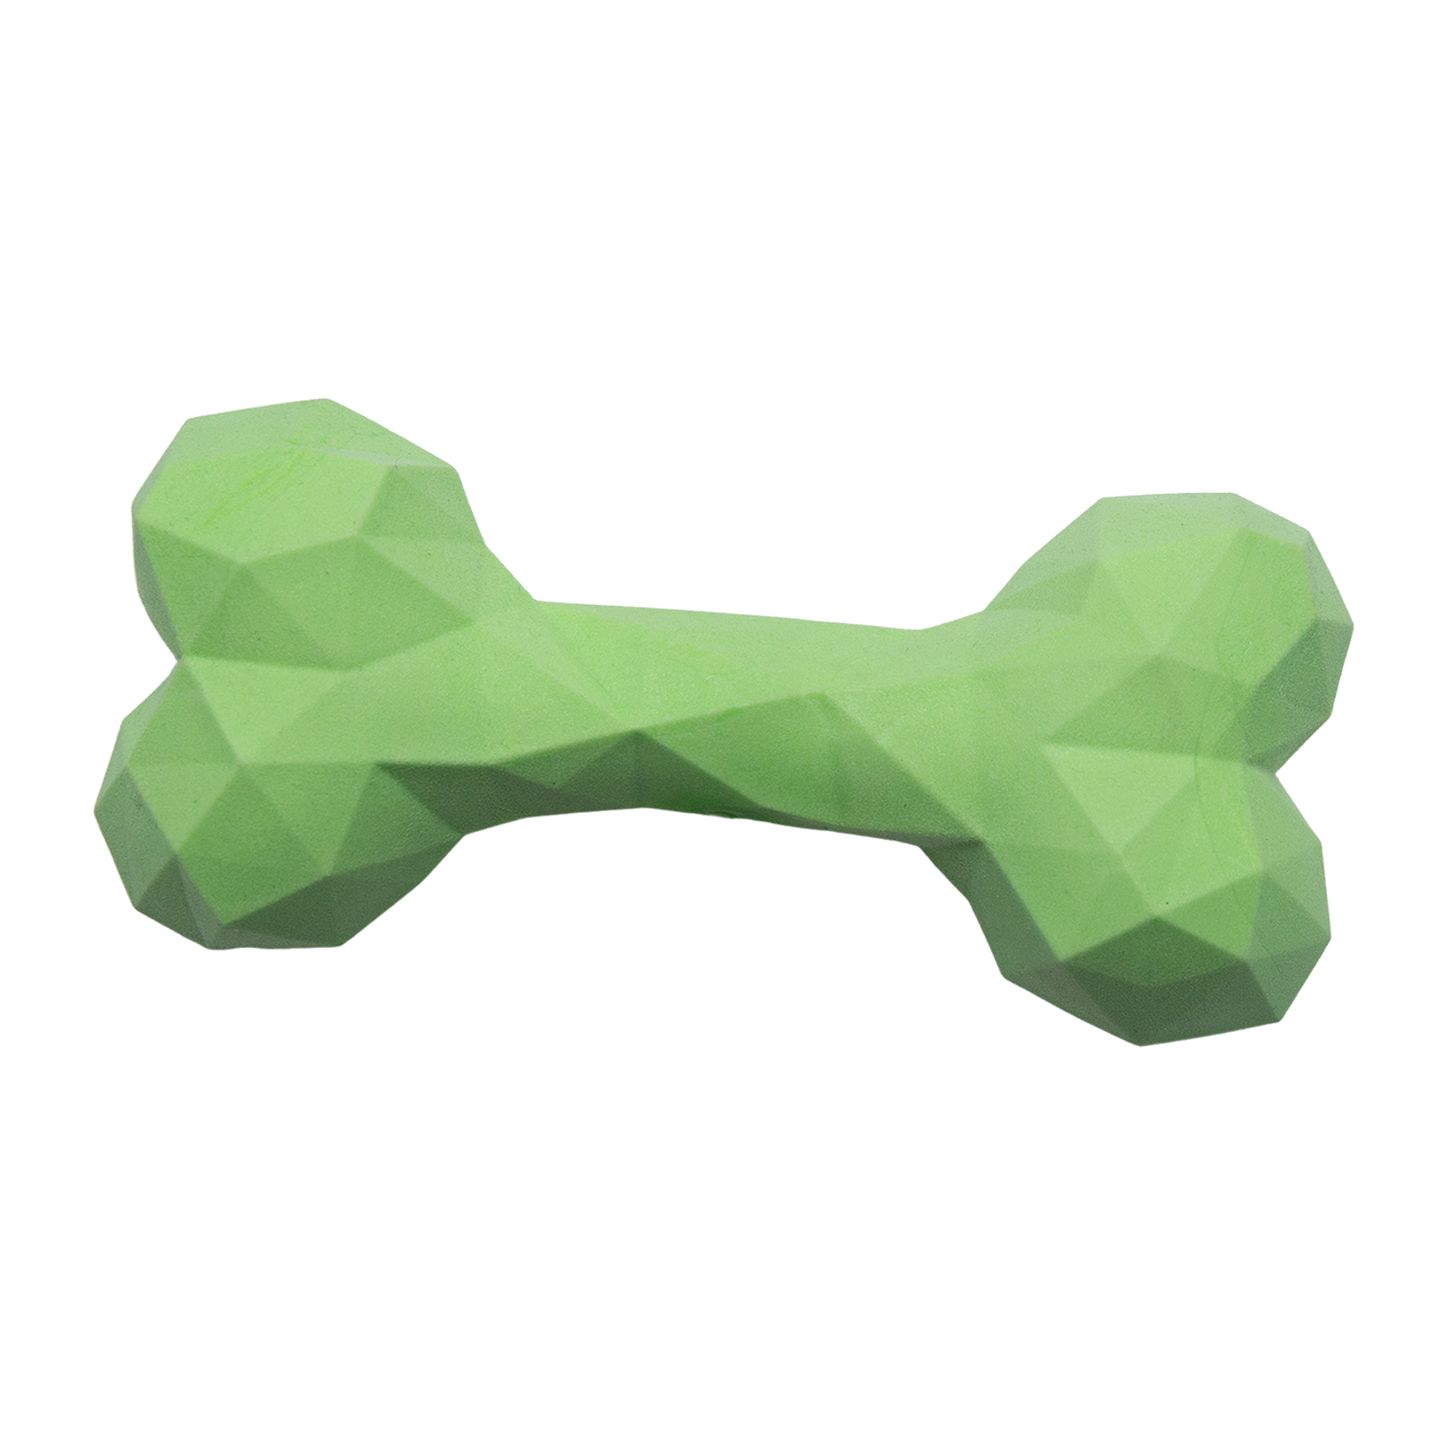 Snugz Dog Toy - Green